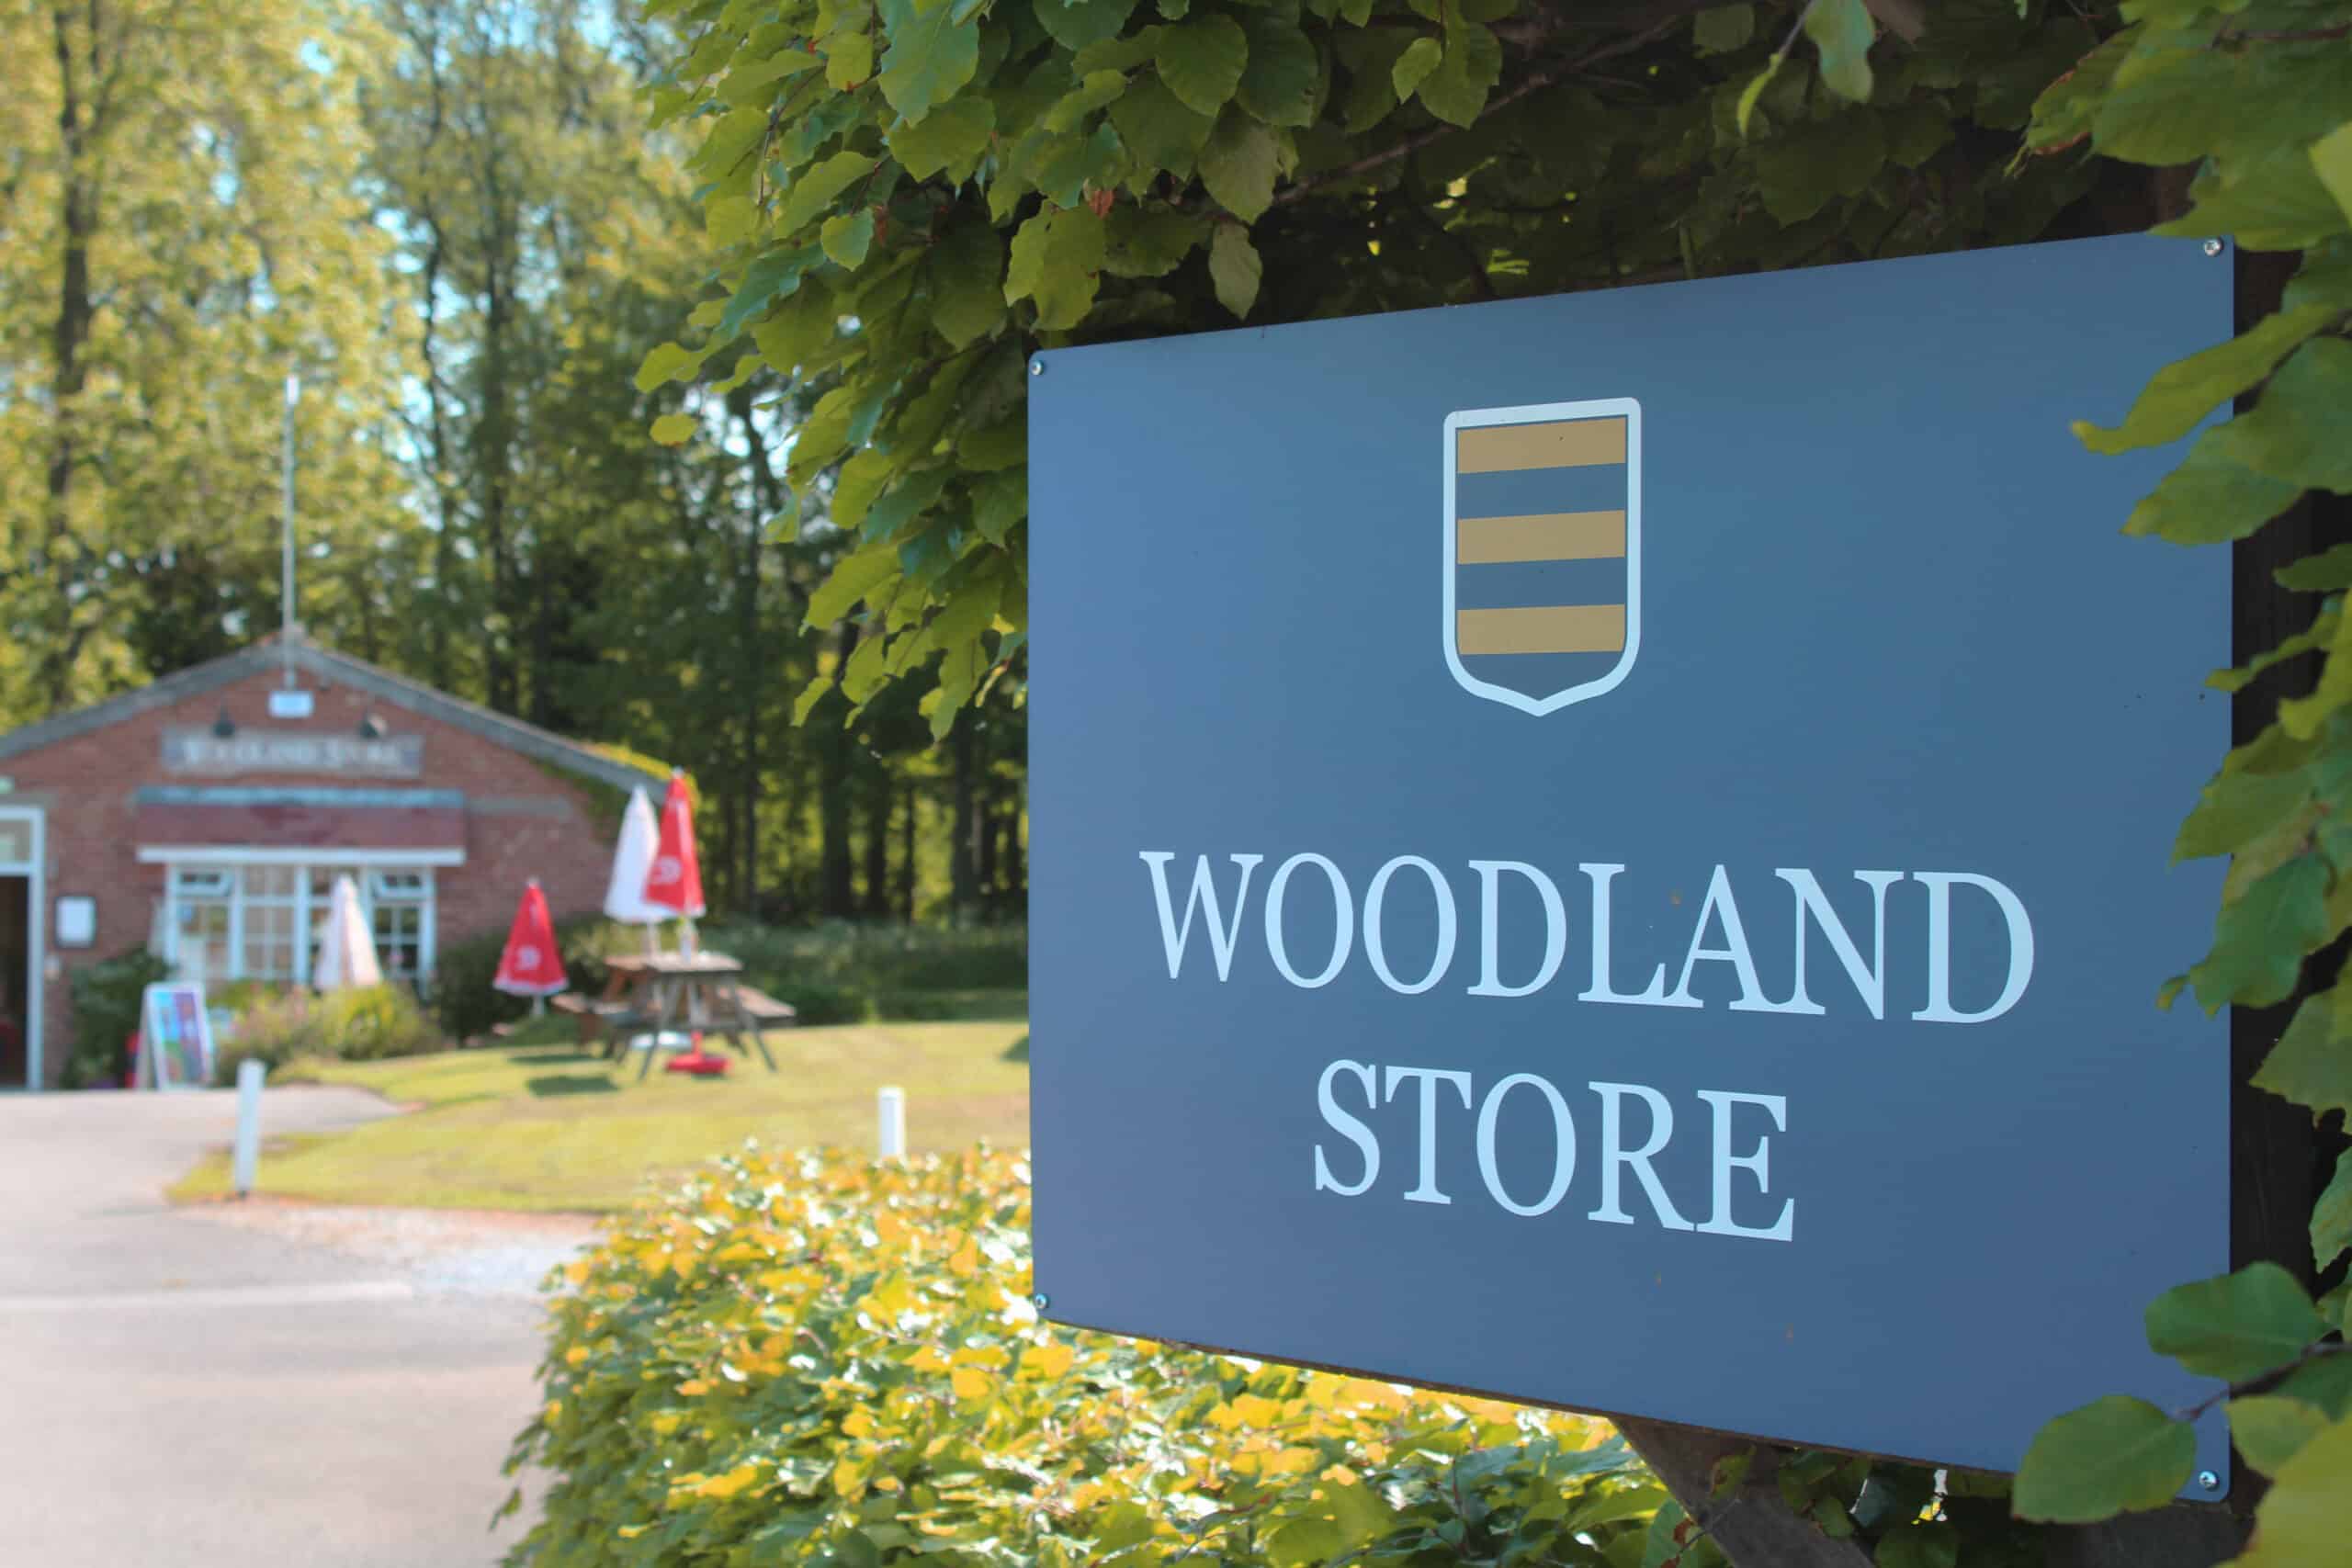 The Woodland Store Closure